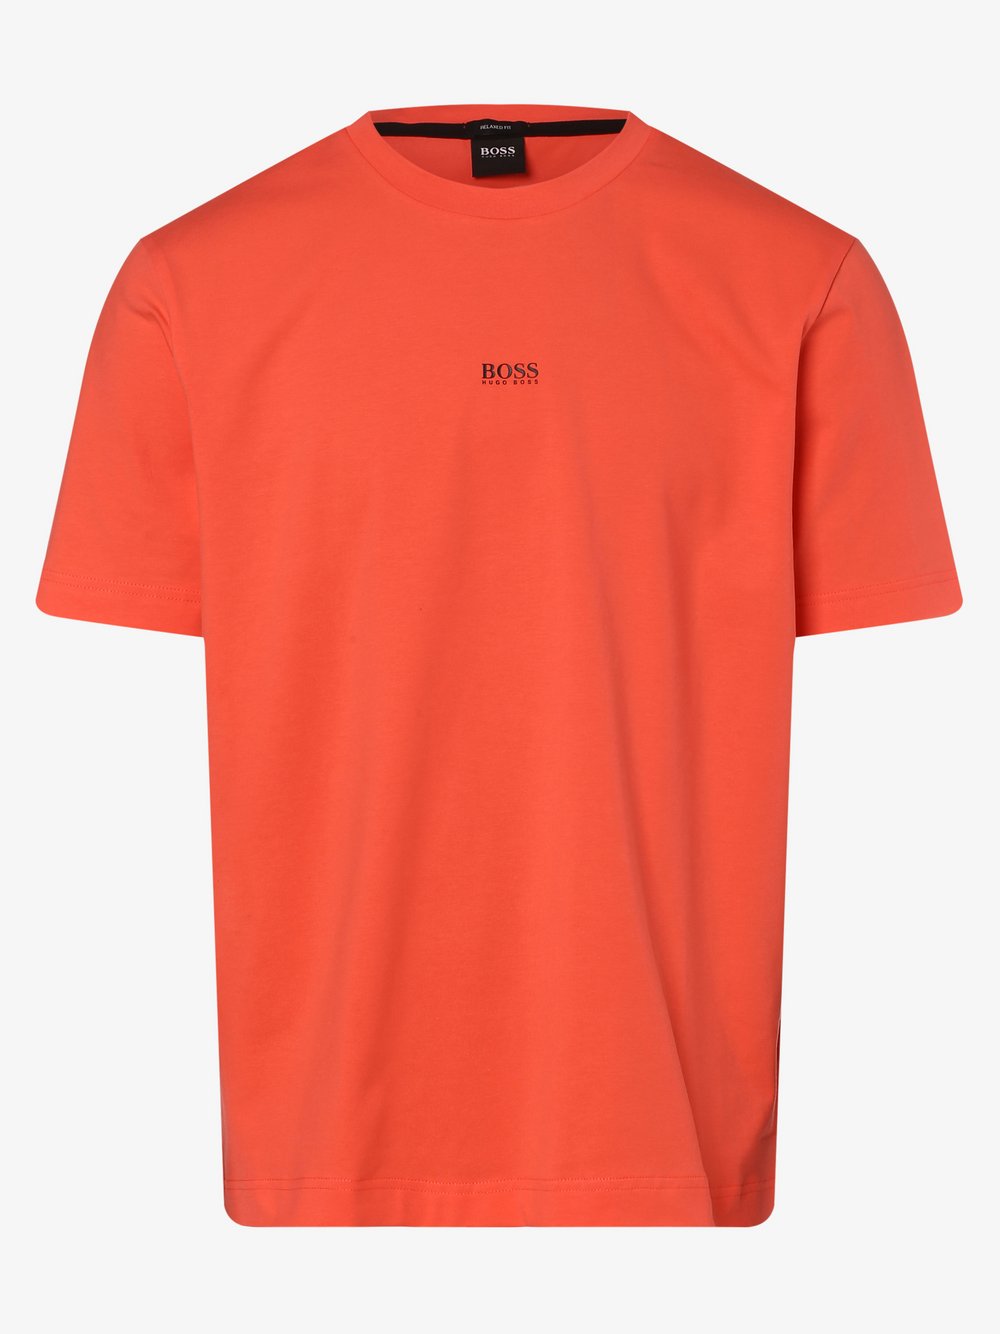 BOSS Casual - T-shirt męski – Tchup, czerwony